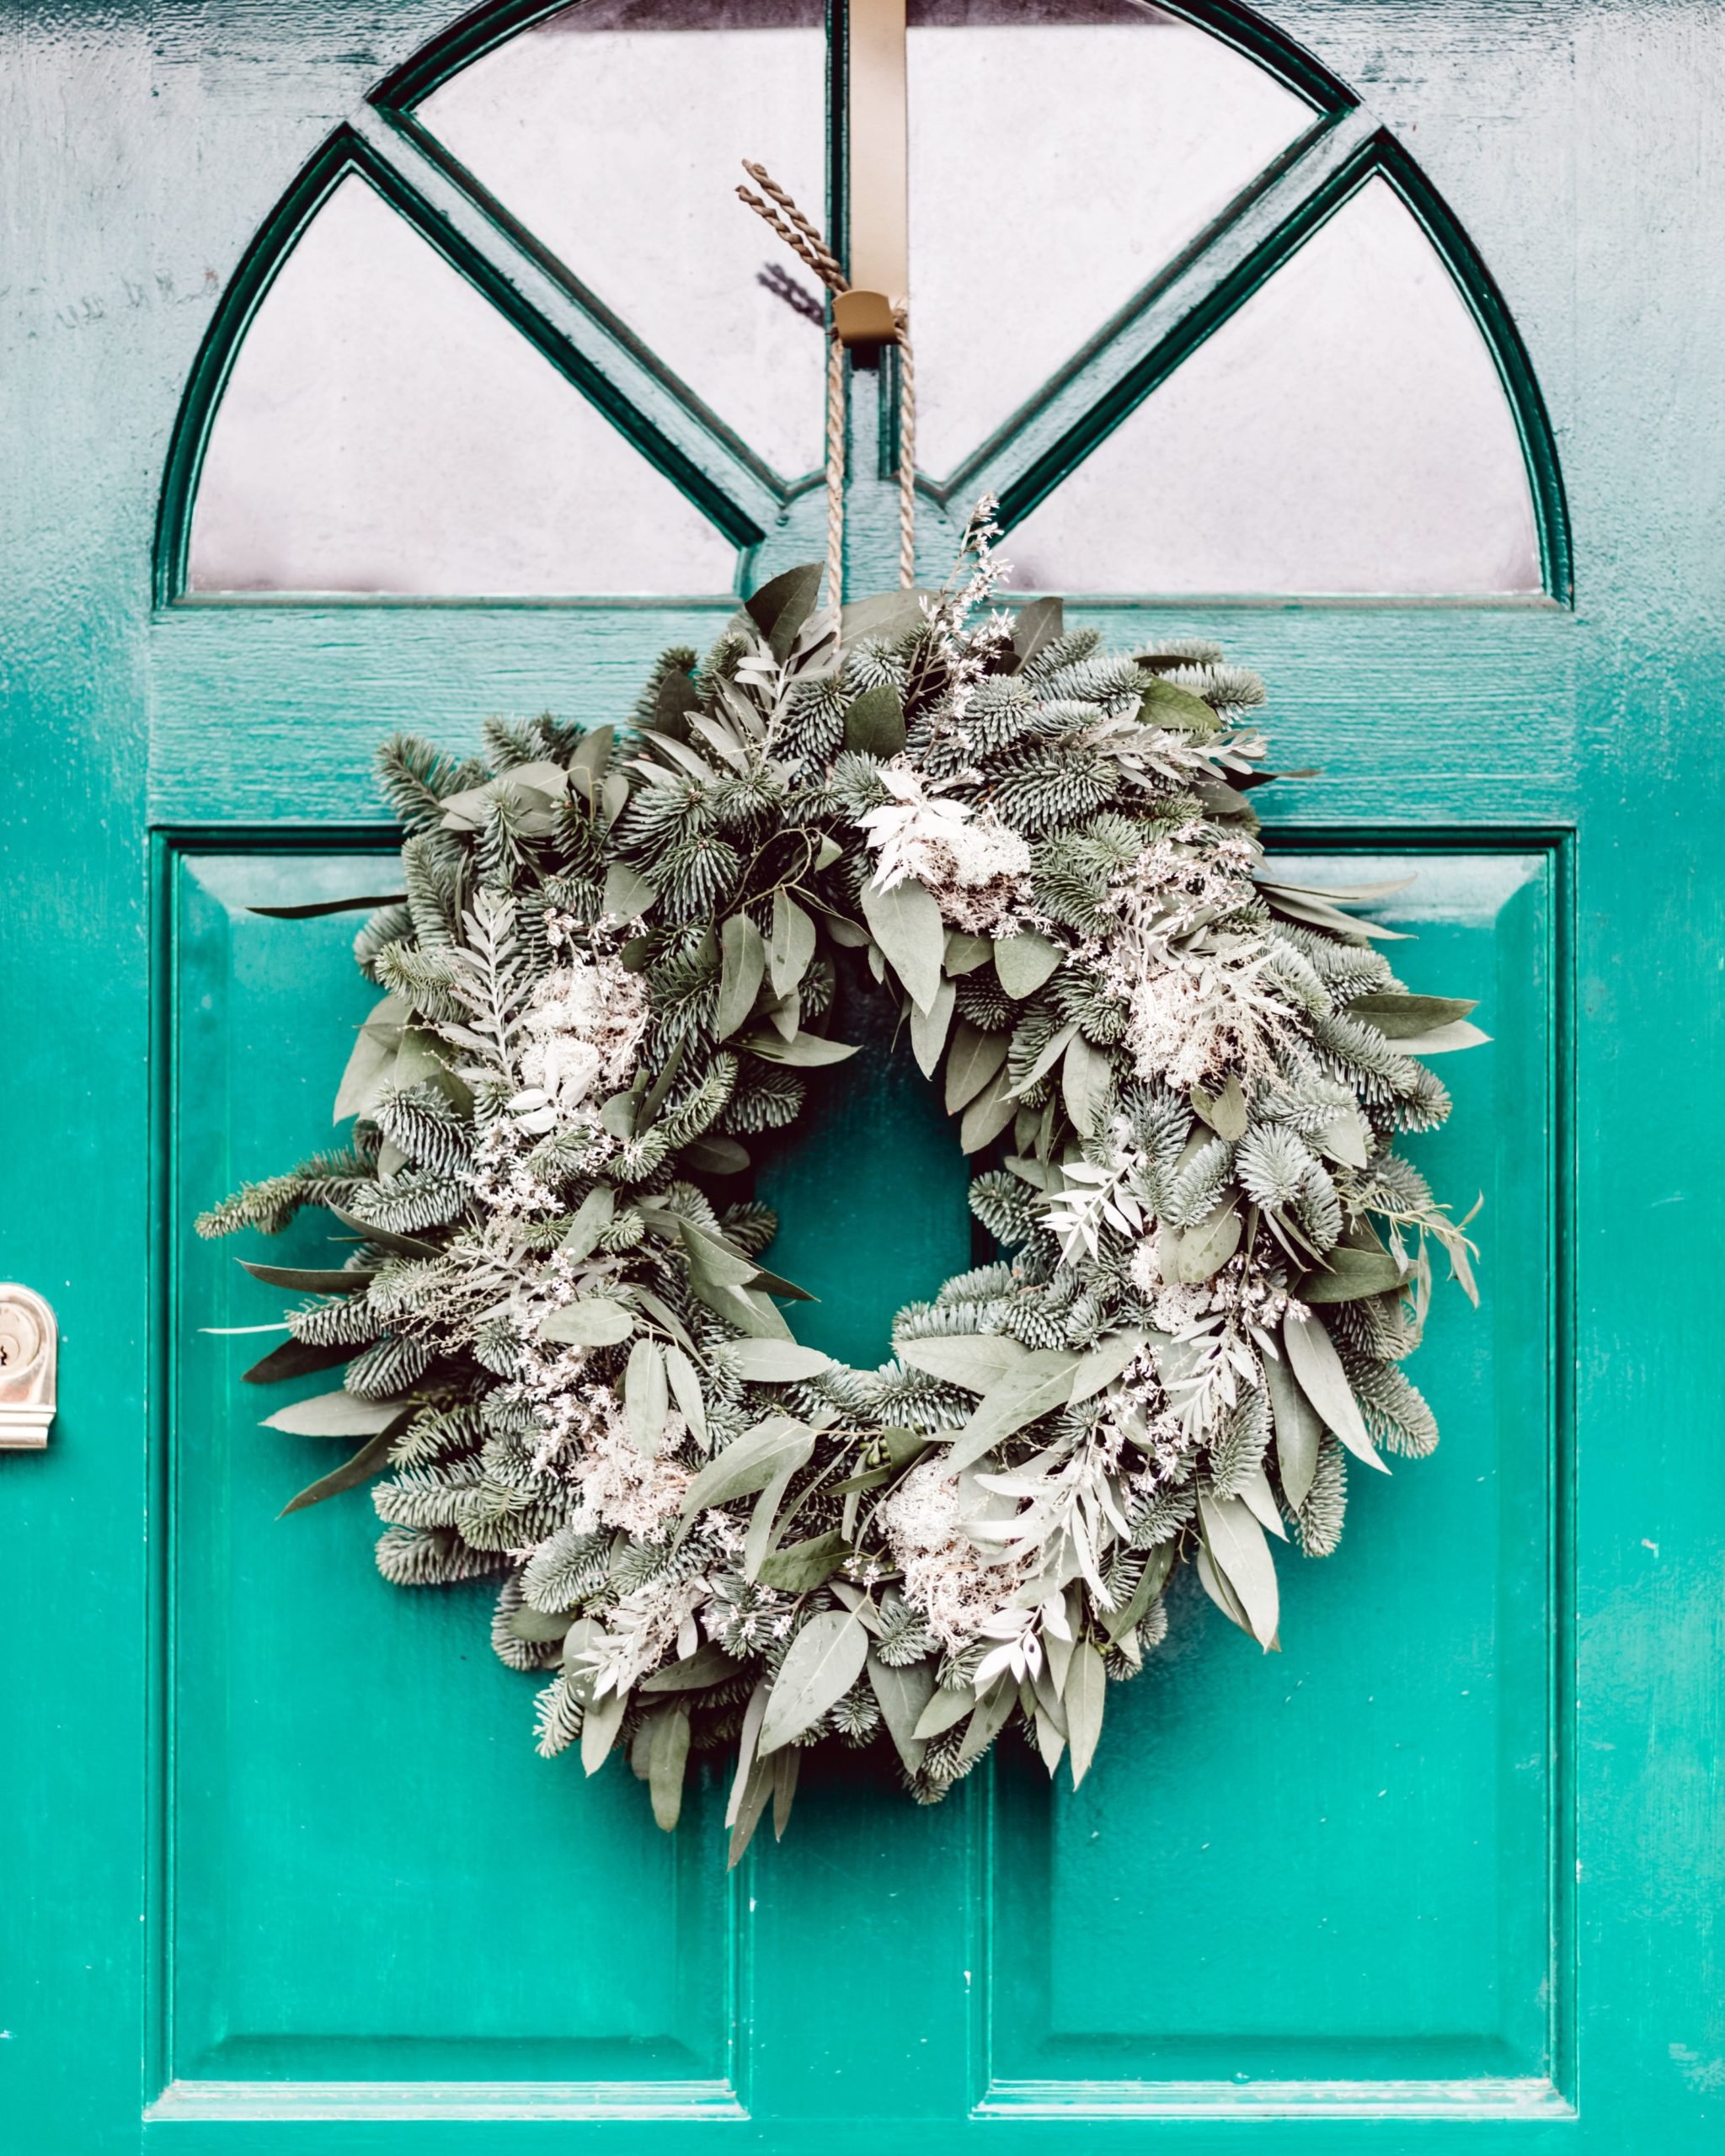 <img src="tealjpg" alt="teal door with christmas garland"/> 